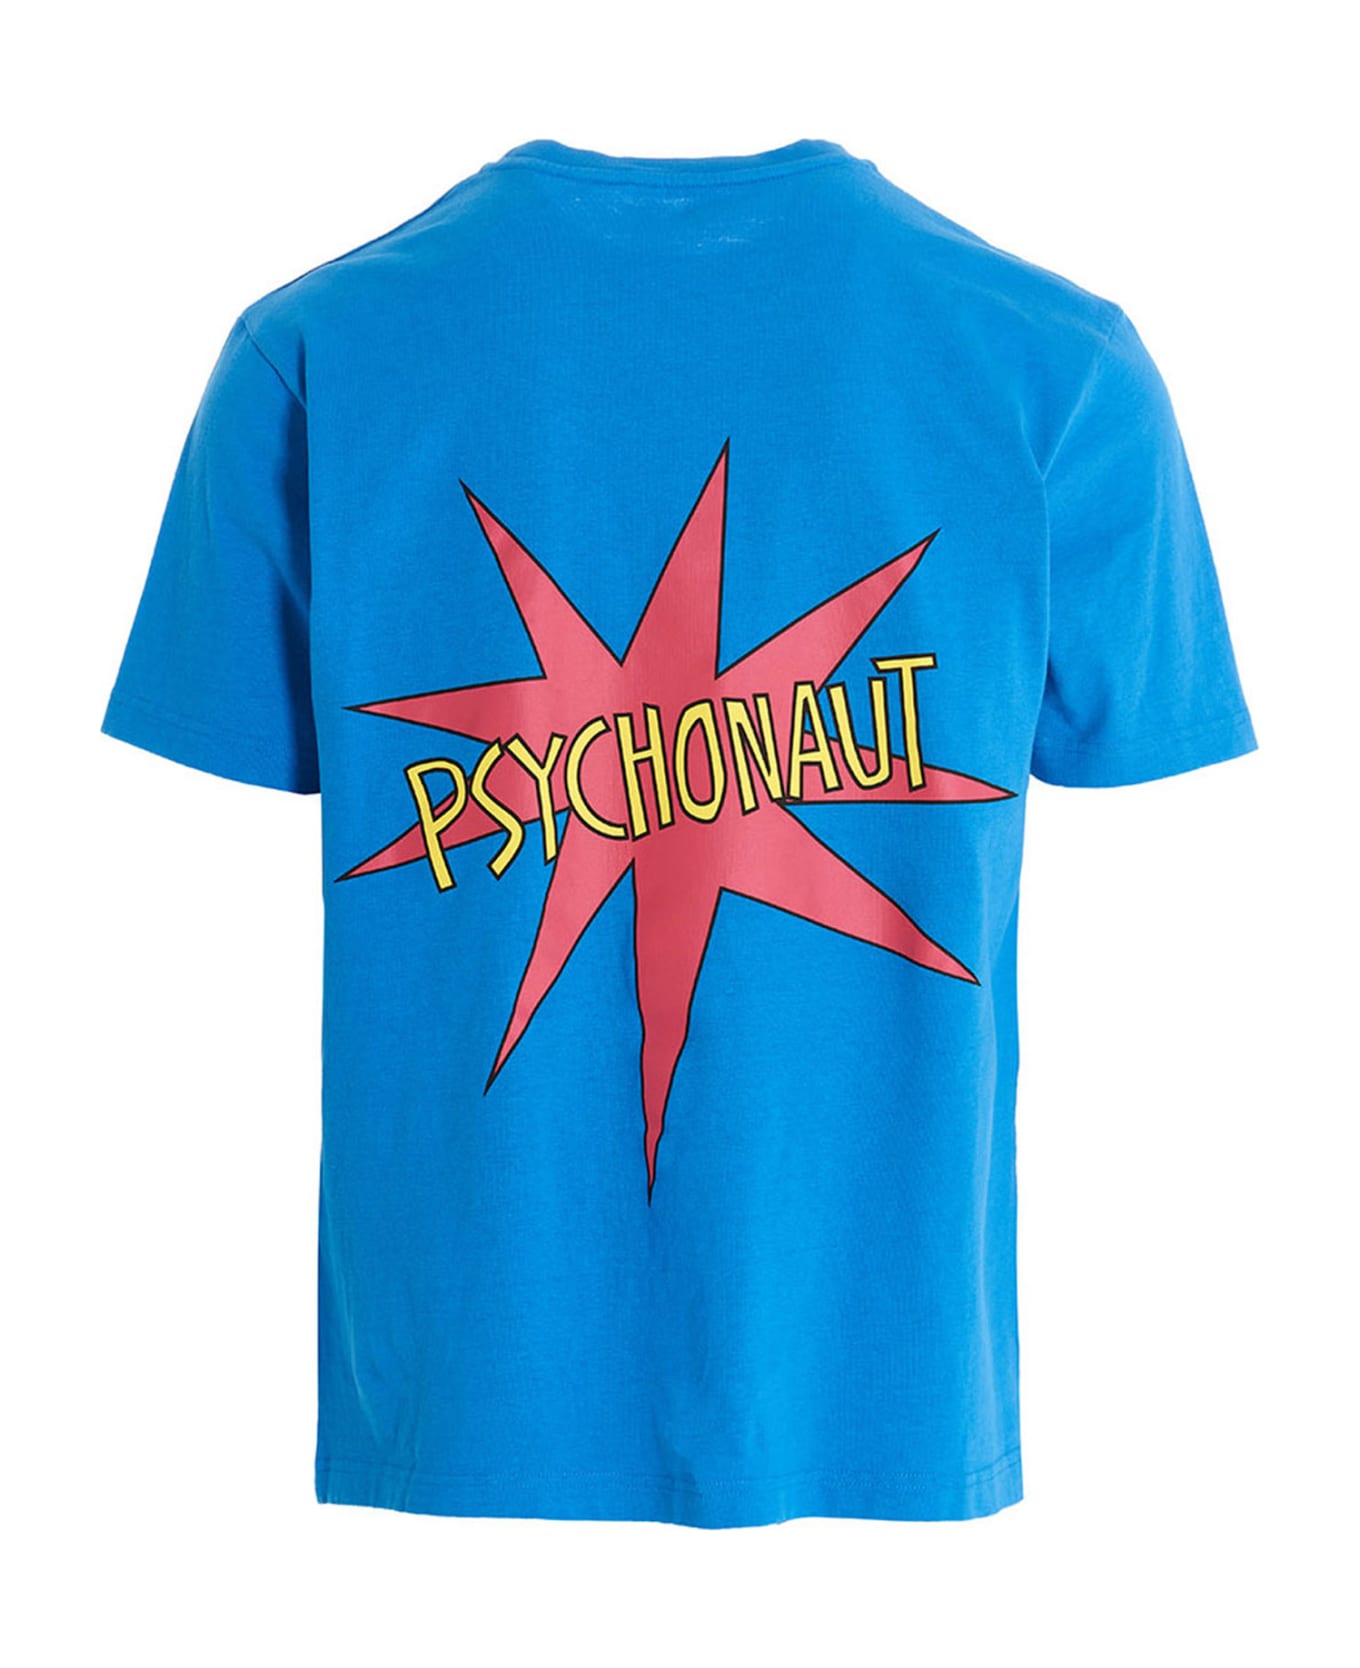 MSFTSrep 'psyconaut' T-shirt - C シャツ